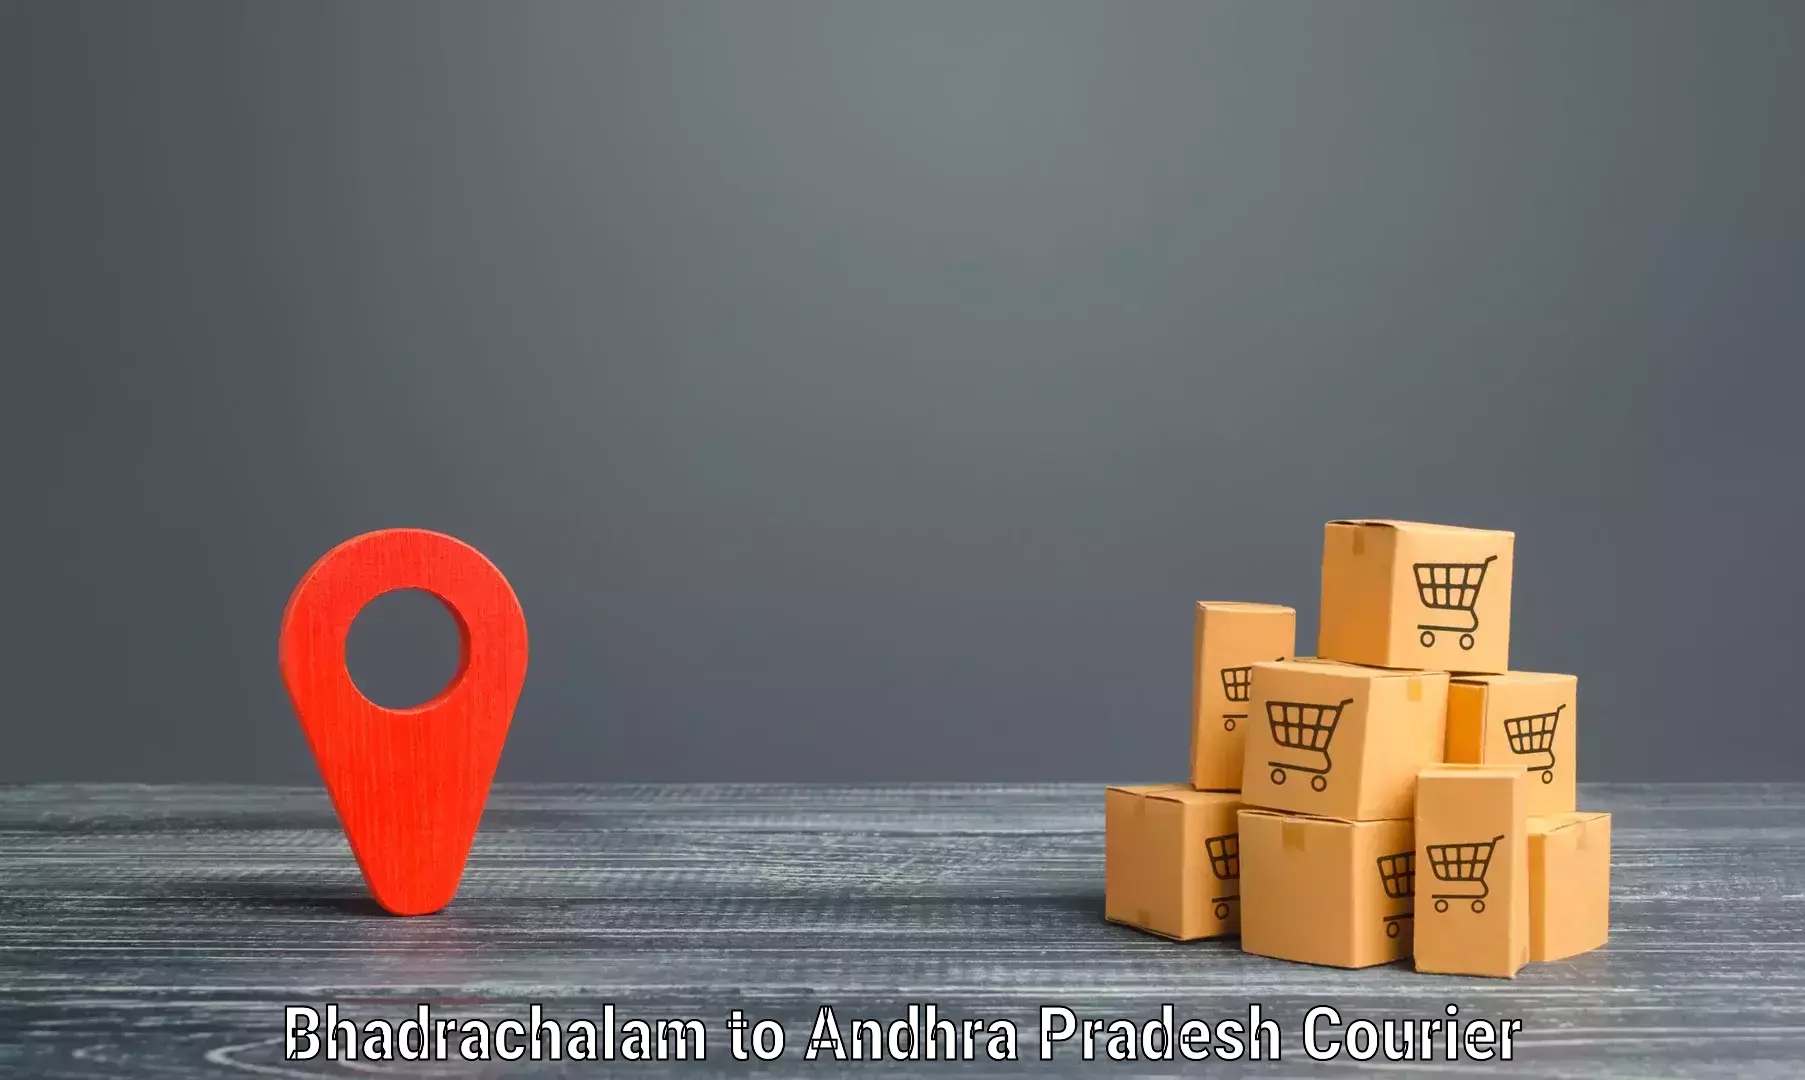 Courier service comparison Bhadrachalam to Visakhapatnam